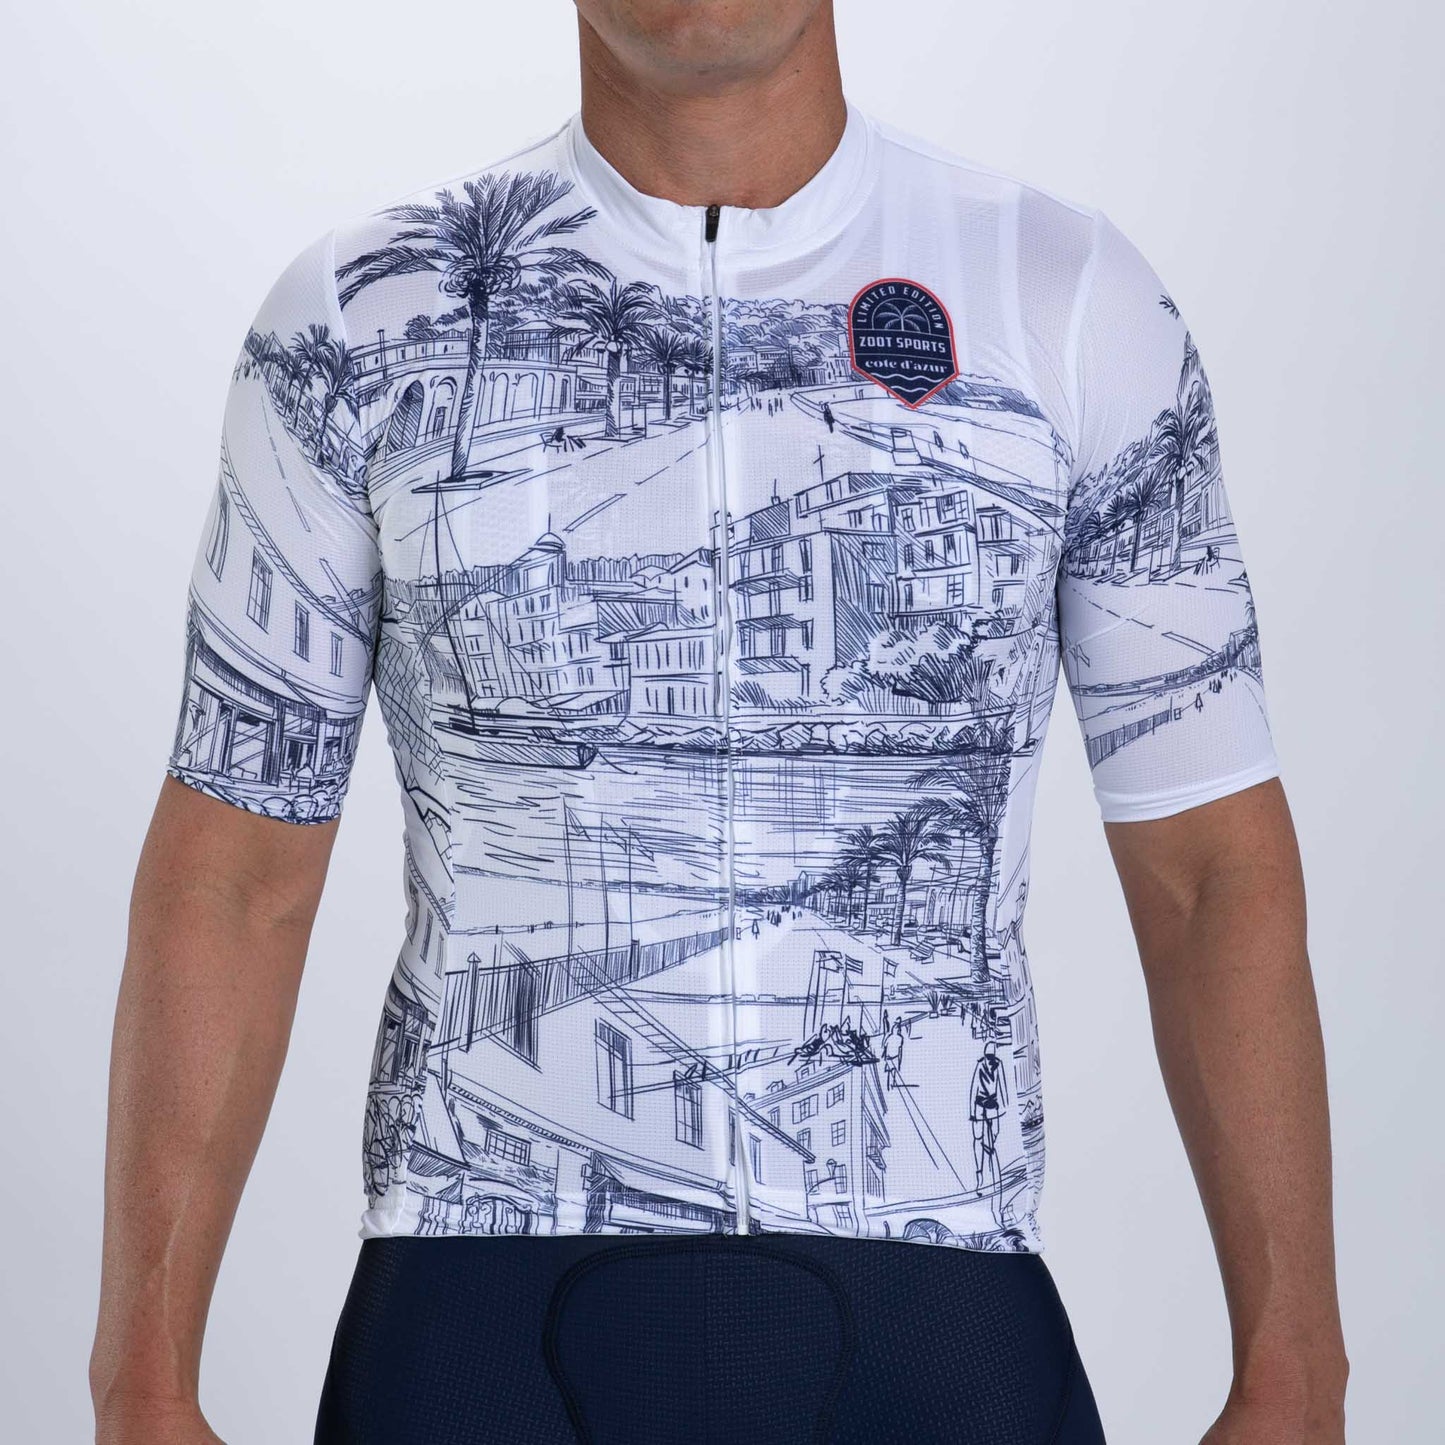 TriDot Men's LTD Cycle Aero Jersey (with sleeves)